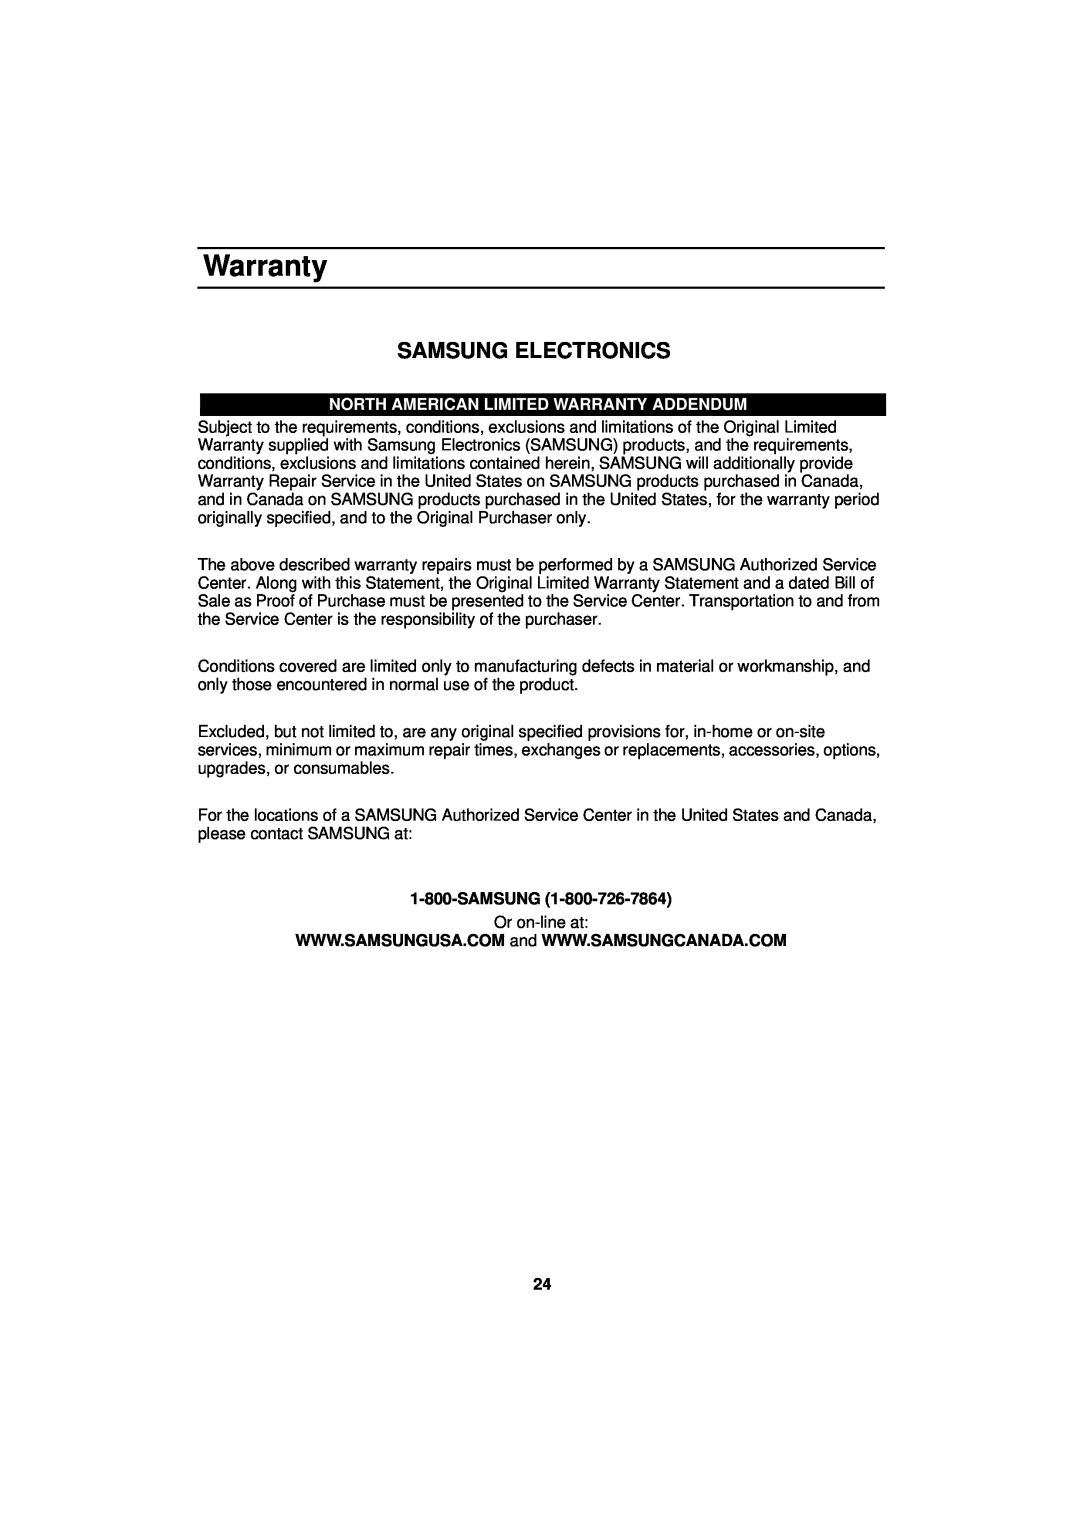 Samsung DE68-01931A-01 manual Samsung Electronics, North American Limited Warranty Addendum 